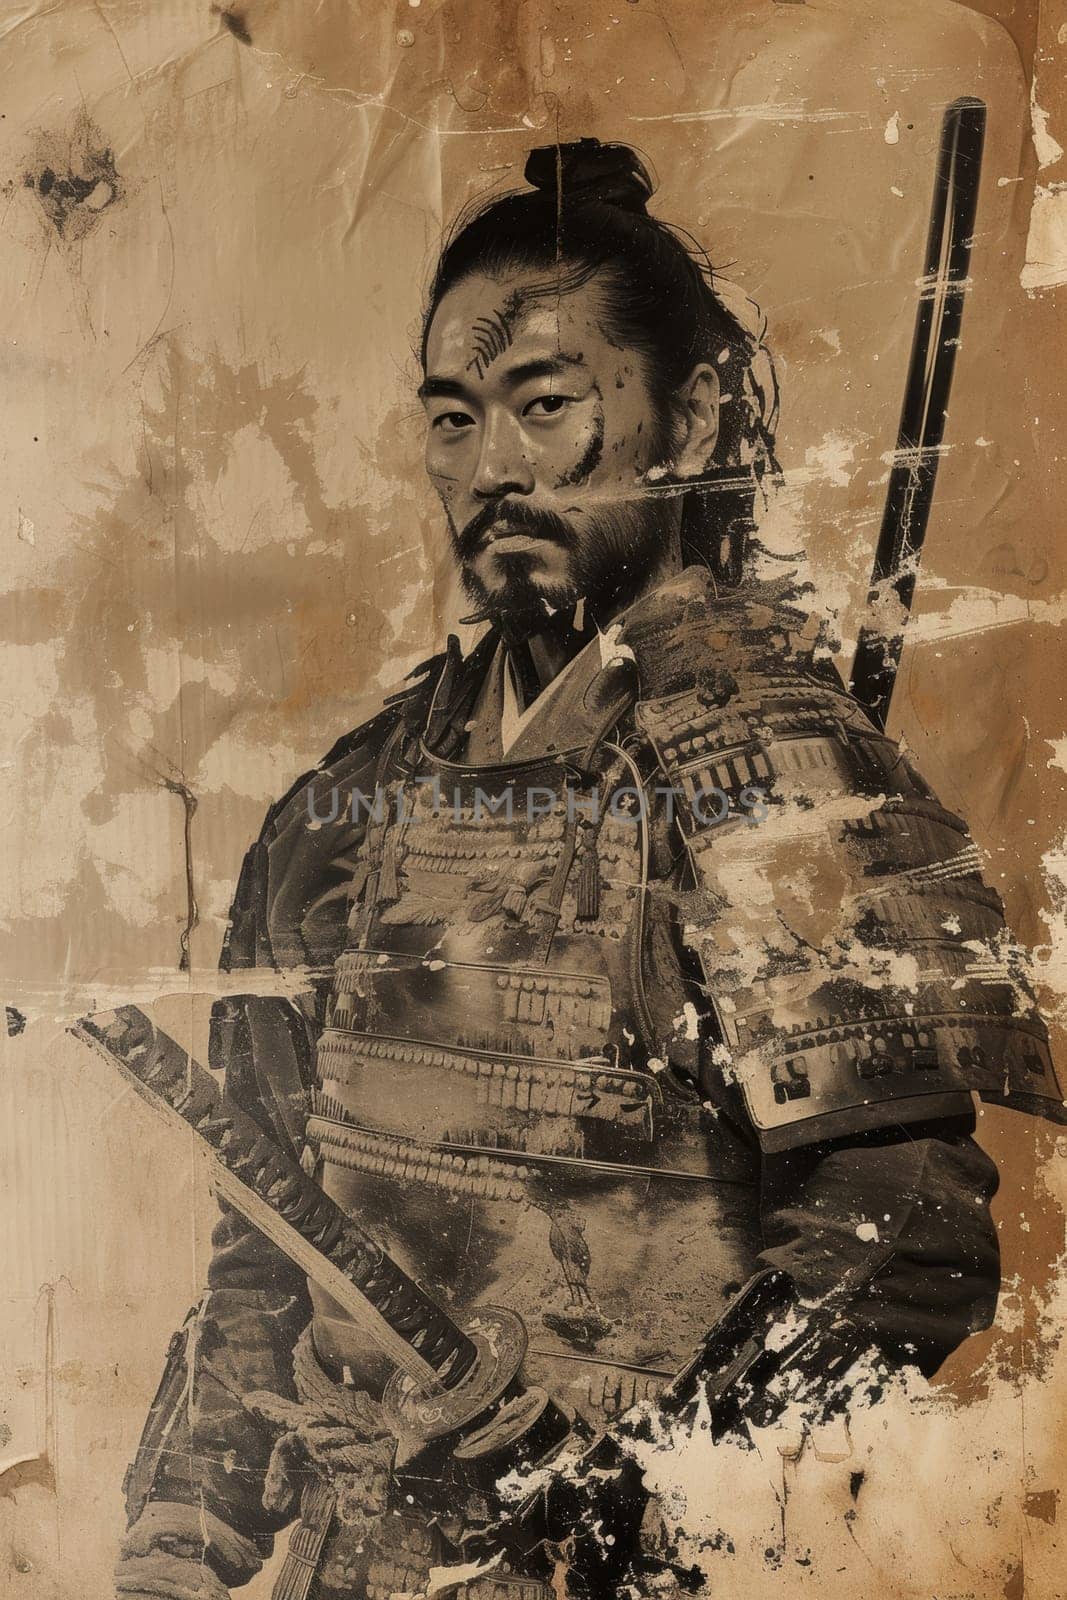 Artistic representation of a samurai warrior in a battle-ready stance, exuding confidence